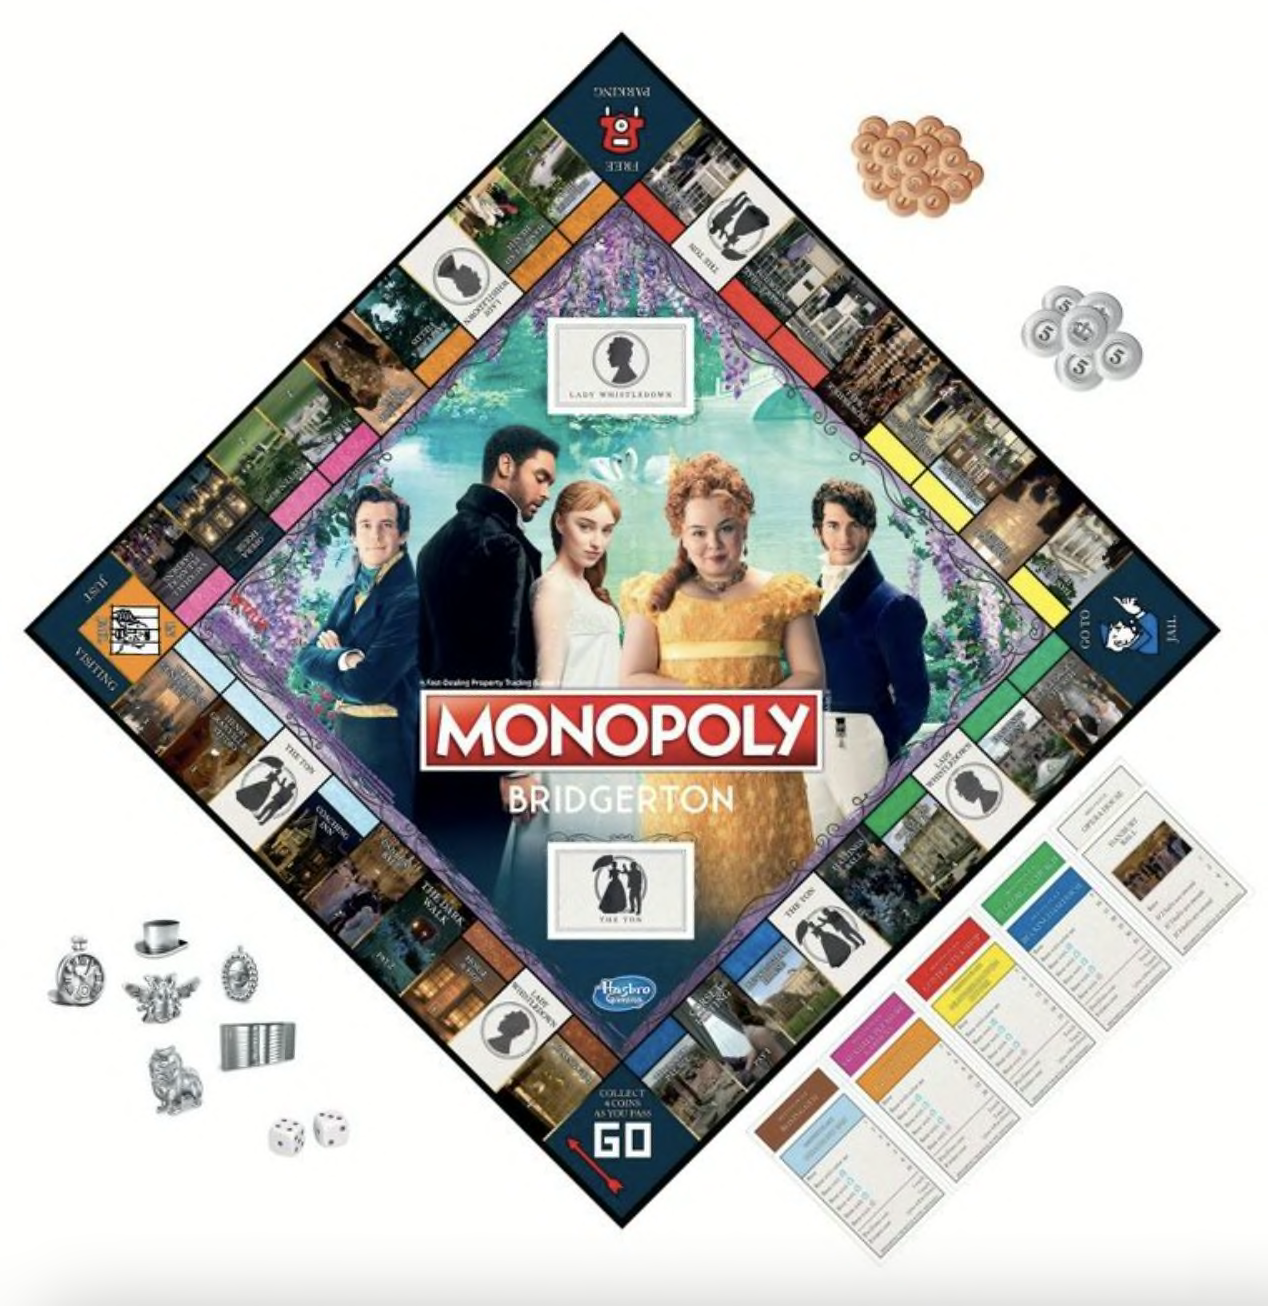 Discover Hasbro's 'Monopoly: Bridgerton' edition board game at Target.